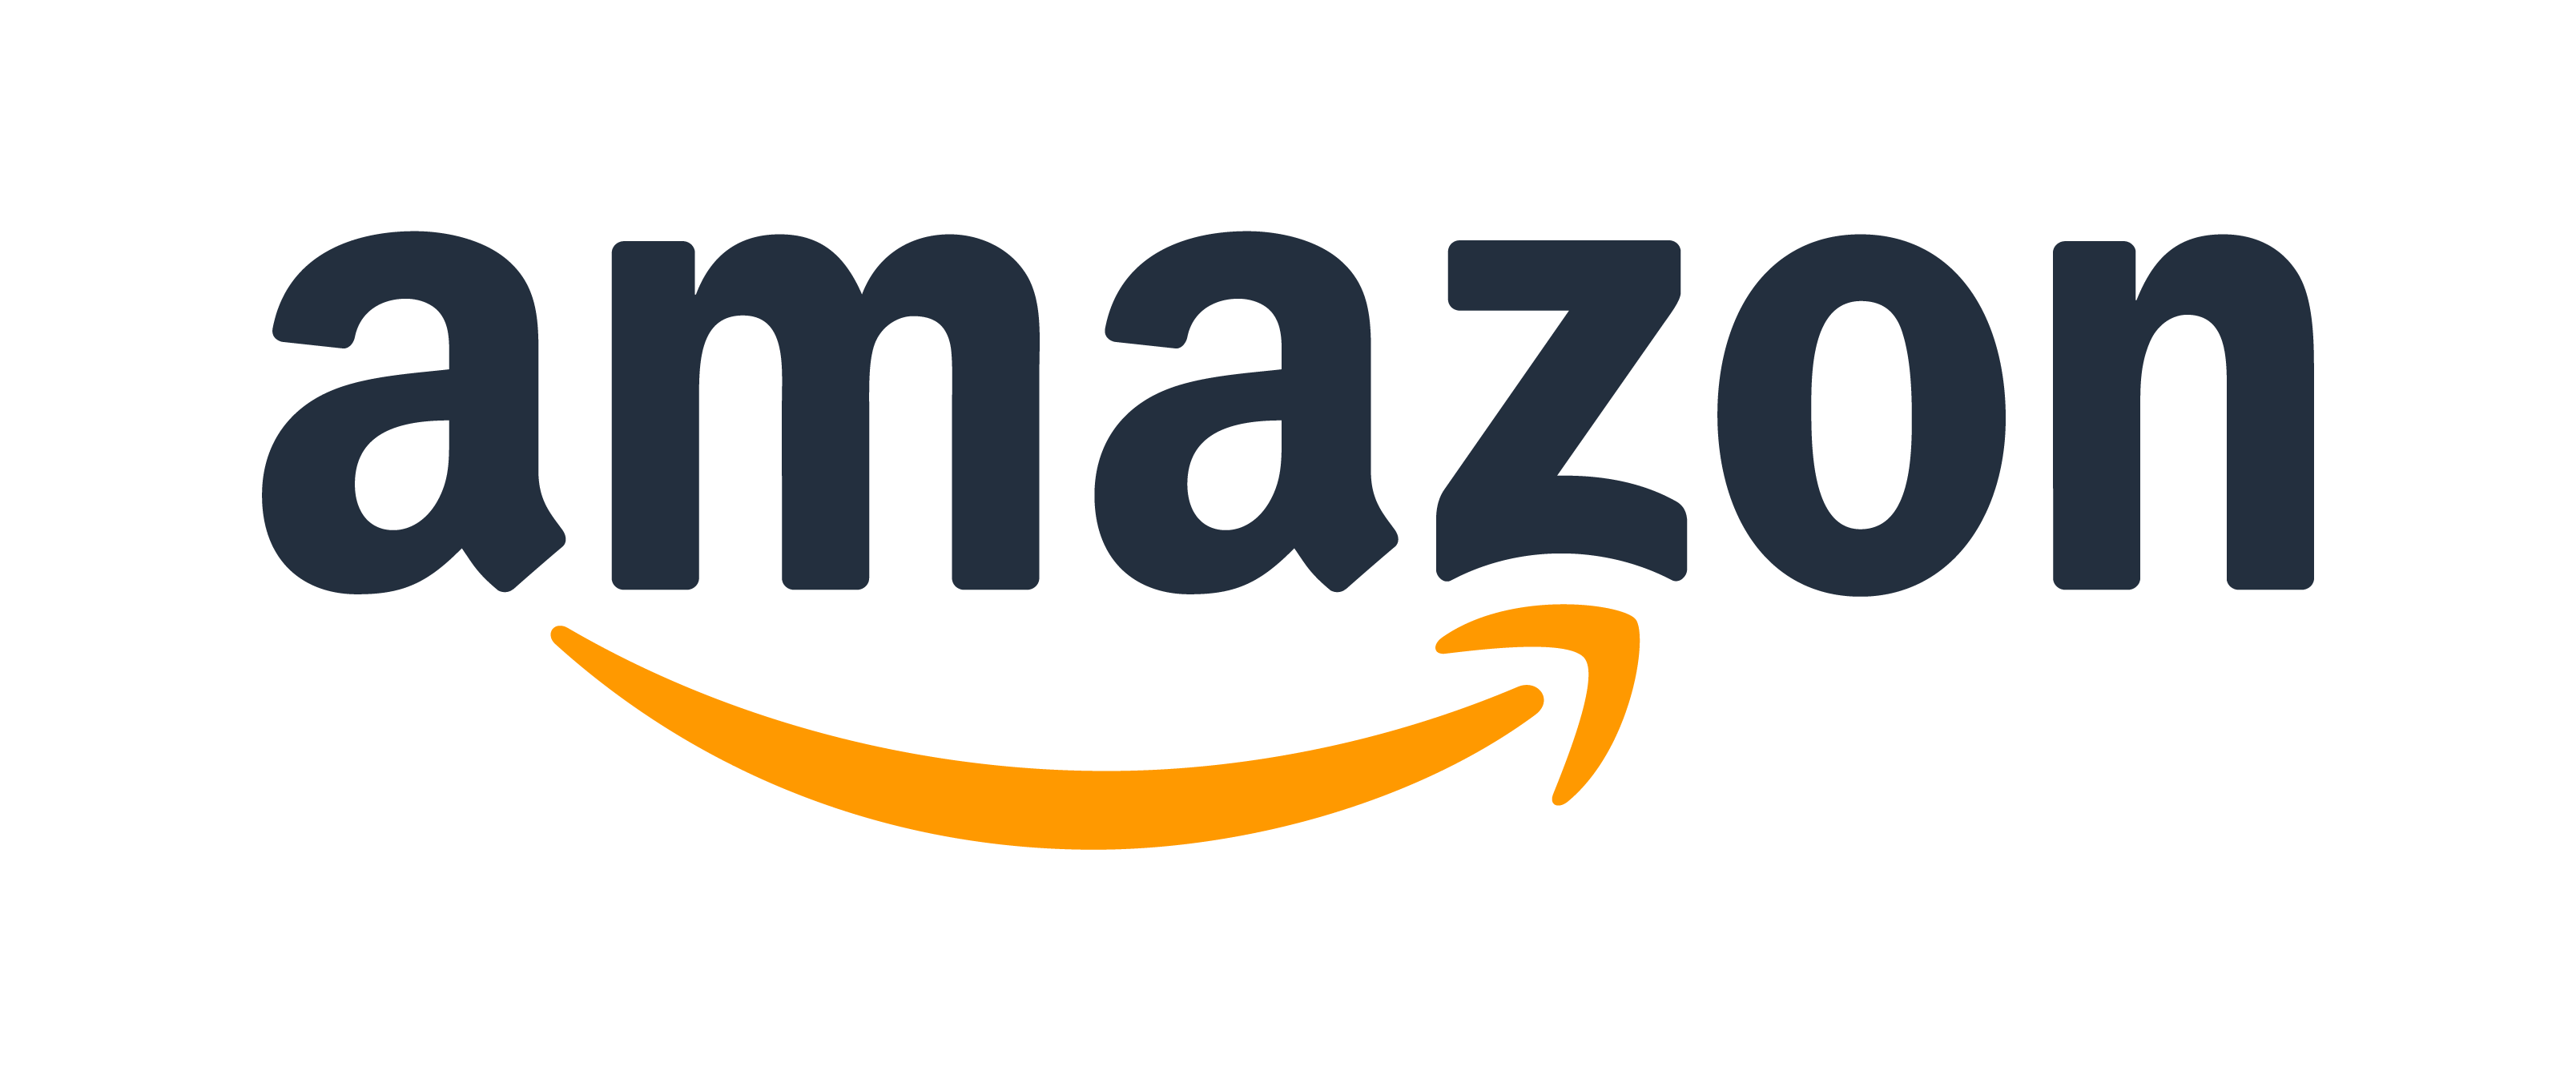 Amazon.sa logo